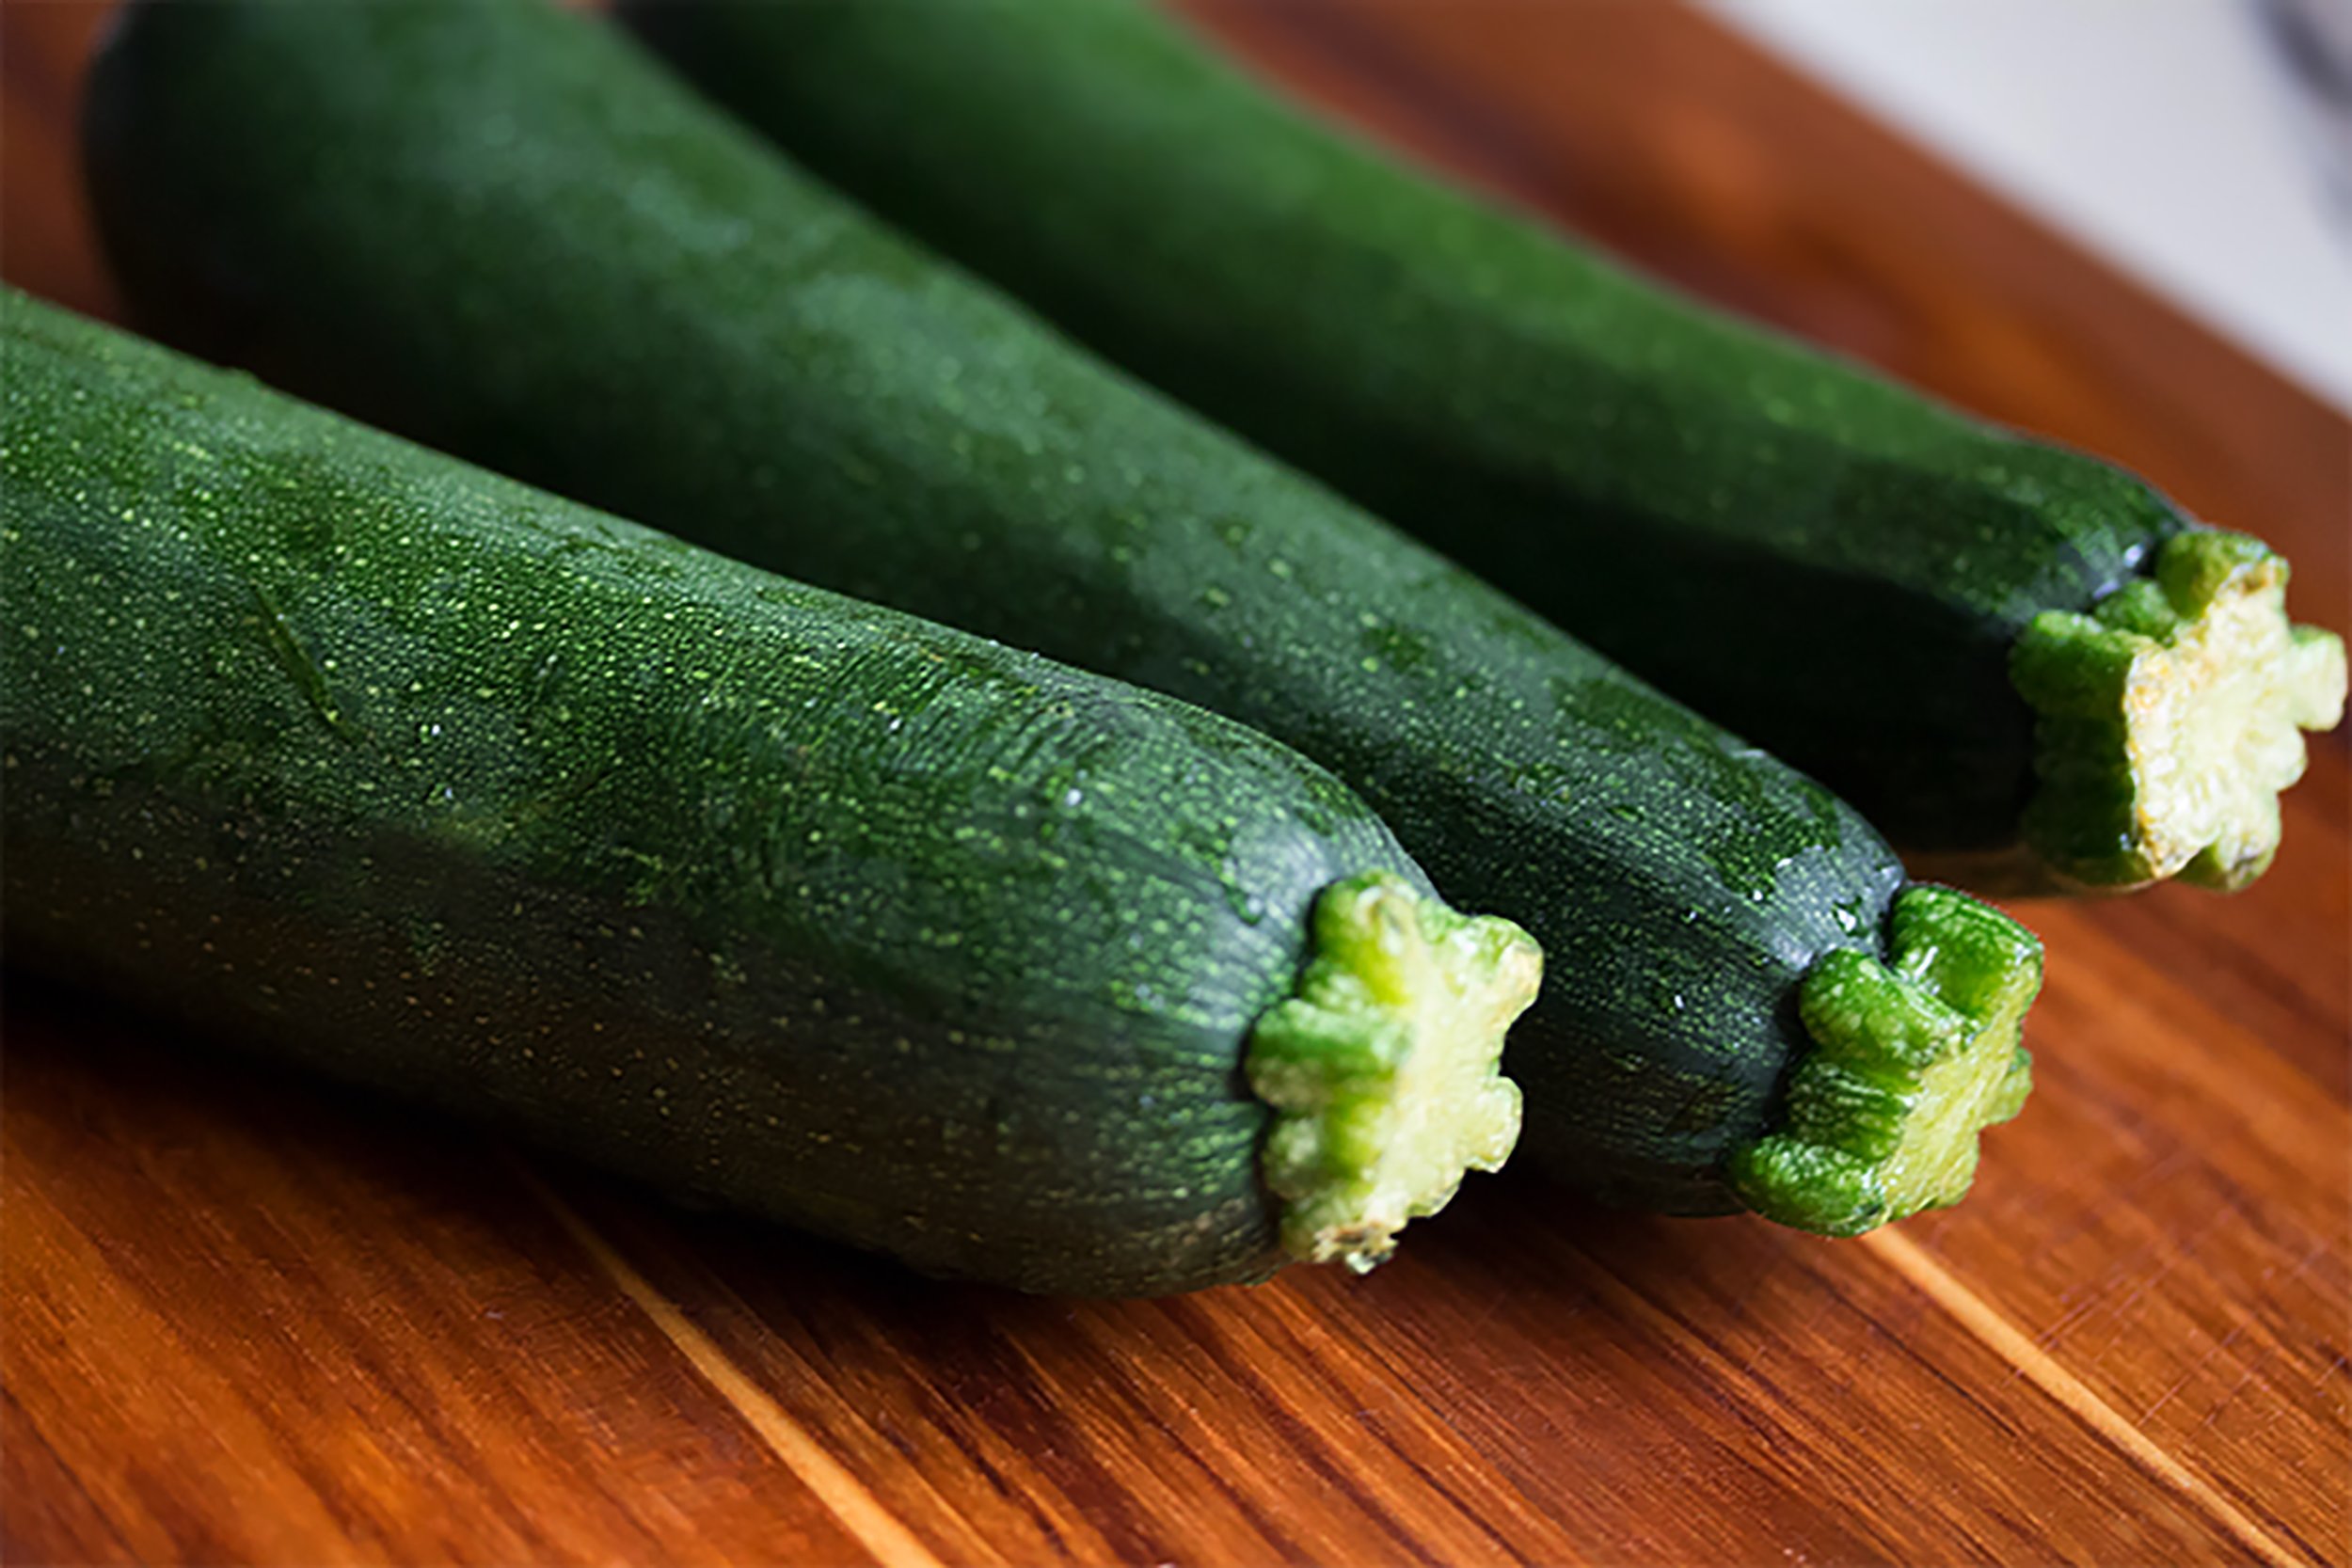 courgette-cucumber-food-128420.jpg